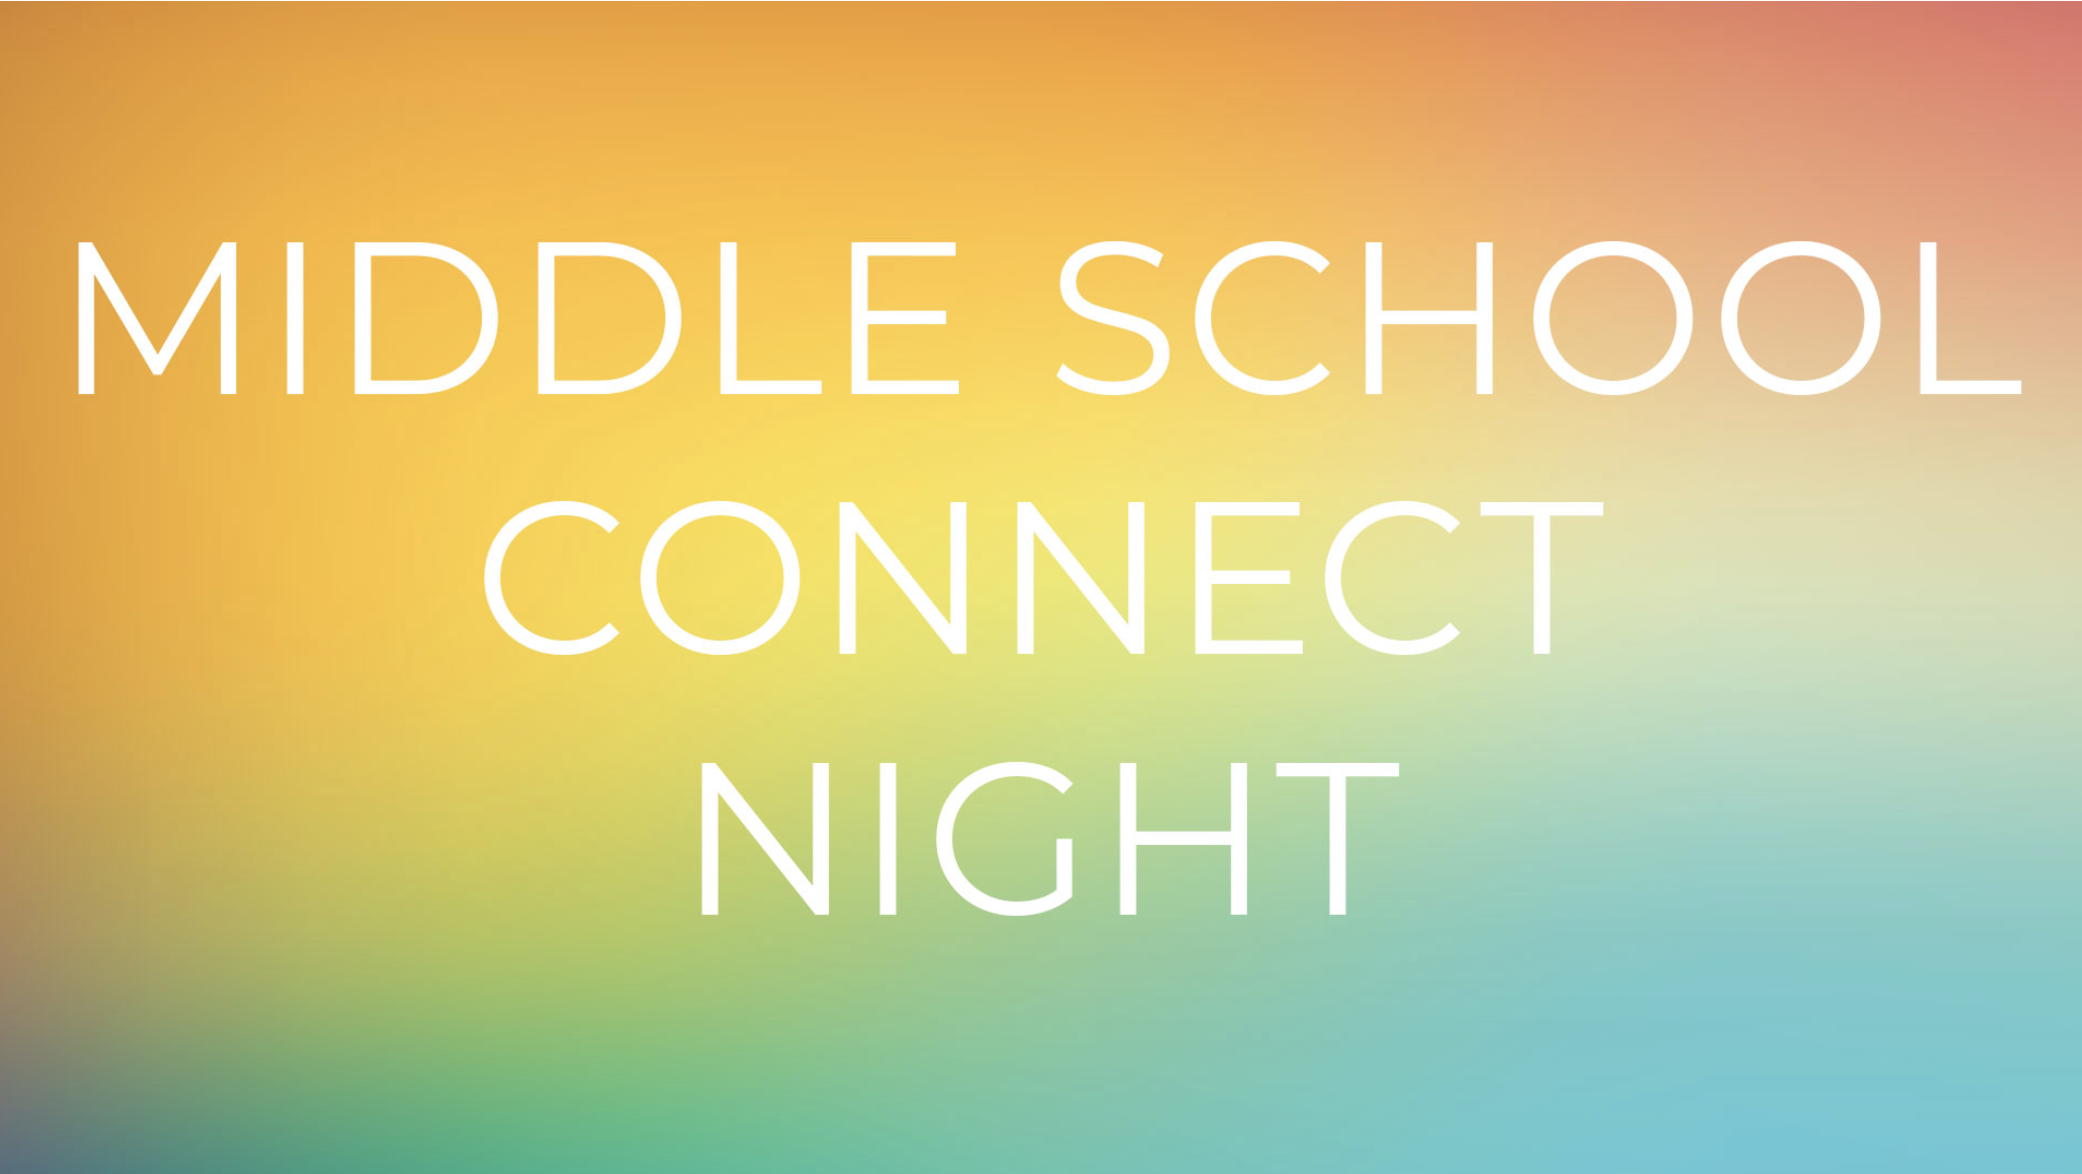 Cottonwood Creek Church - Middle School Connect Night: Movie Night